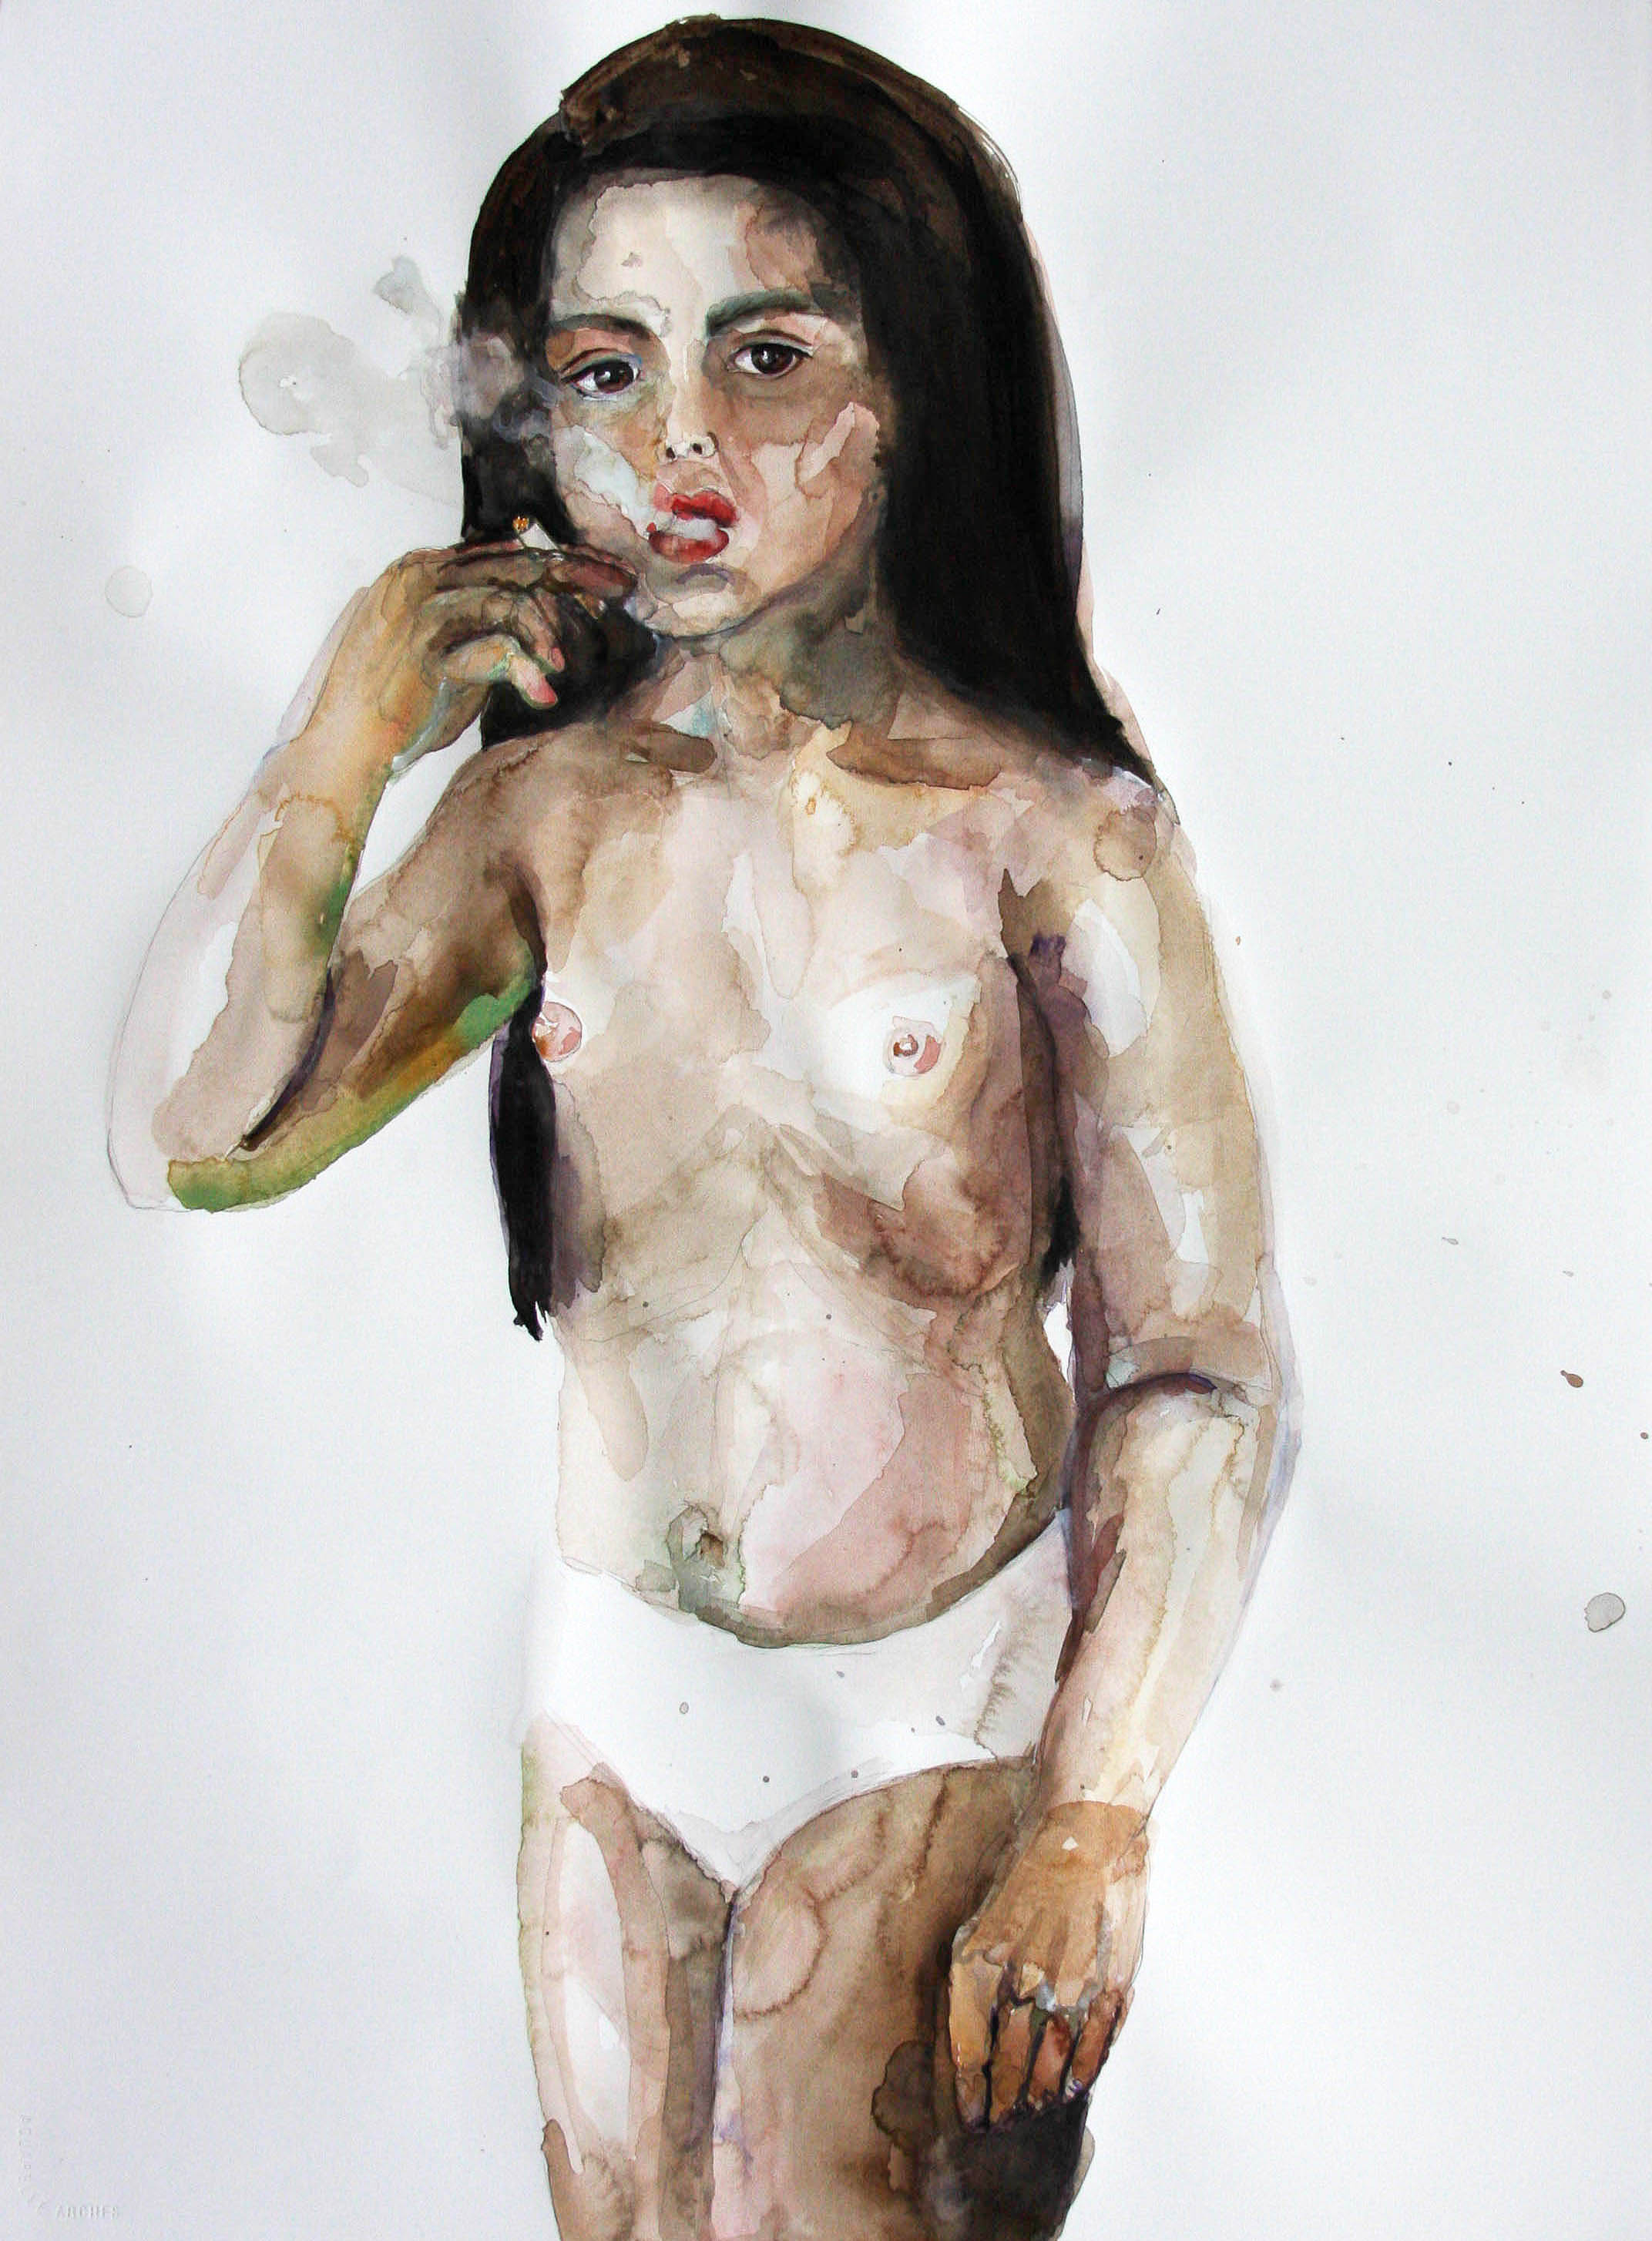 Fumando 4, 2010, Graphite and watercolor on paper, 30 x 22 in.